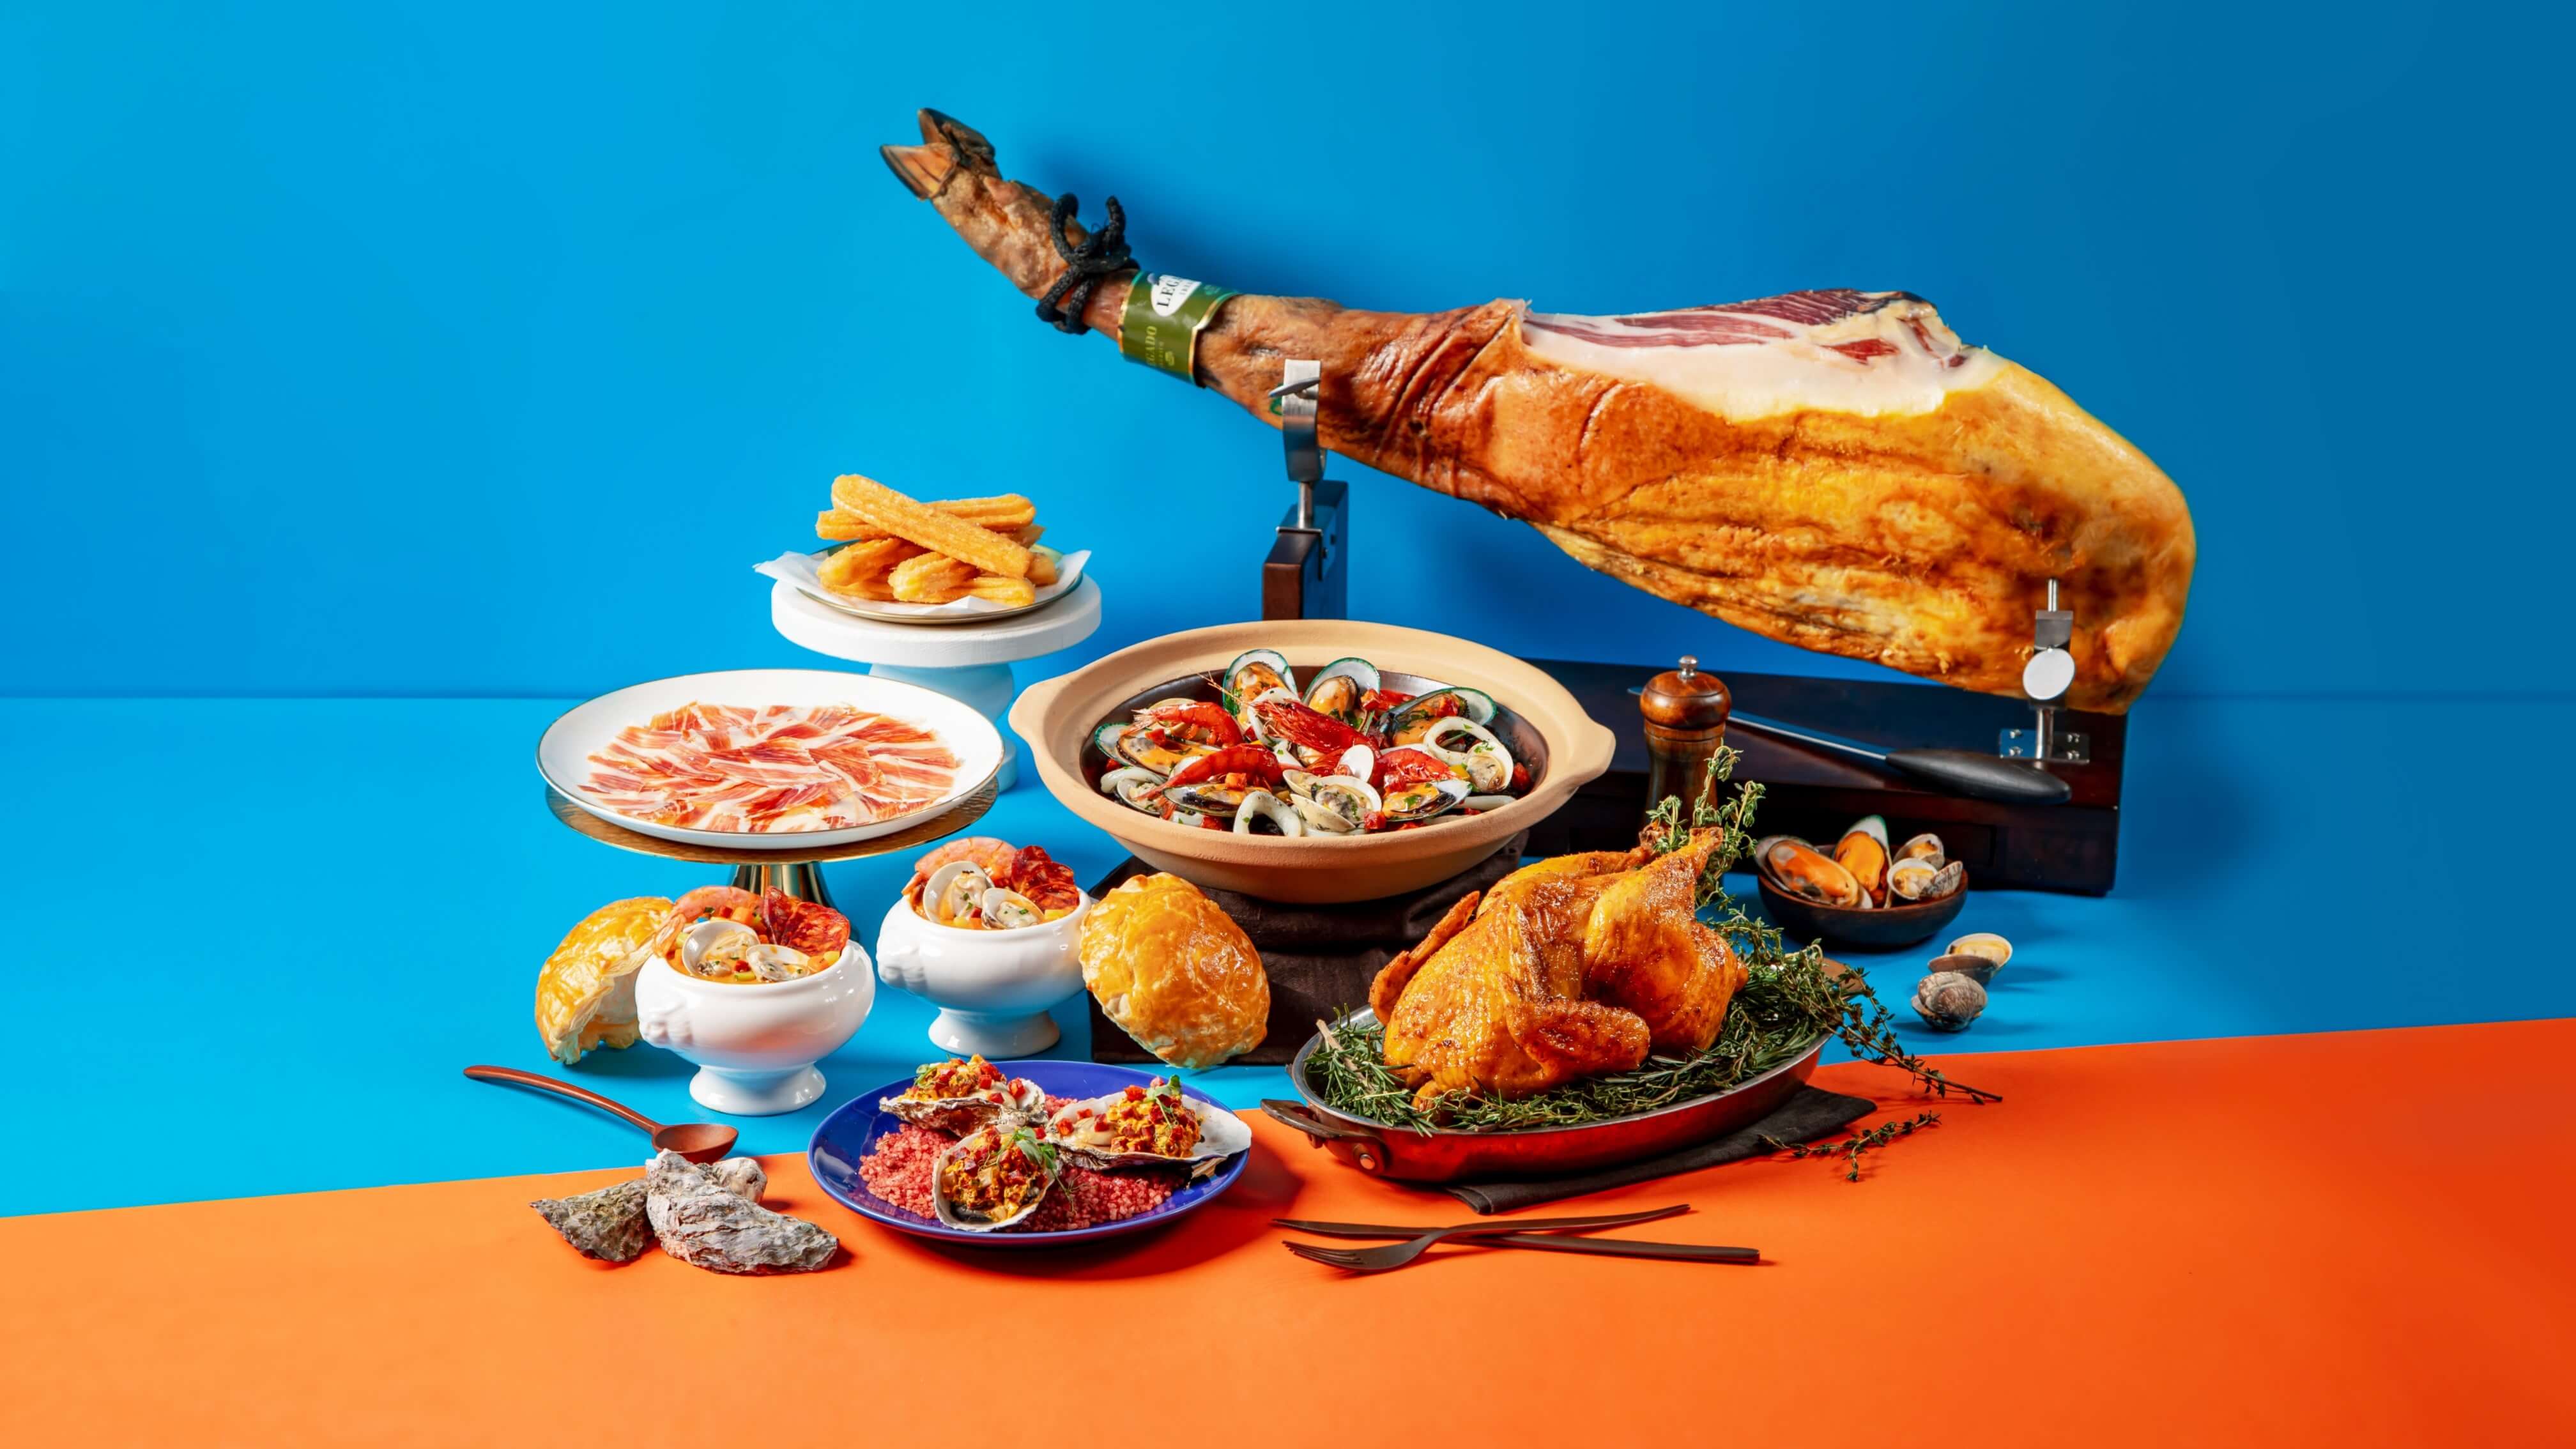 “Southern EUROmantic” Seafood Dinner Buffet | Park Hotel Hong Kong